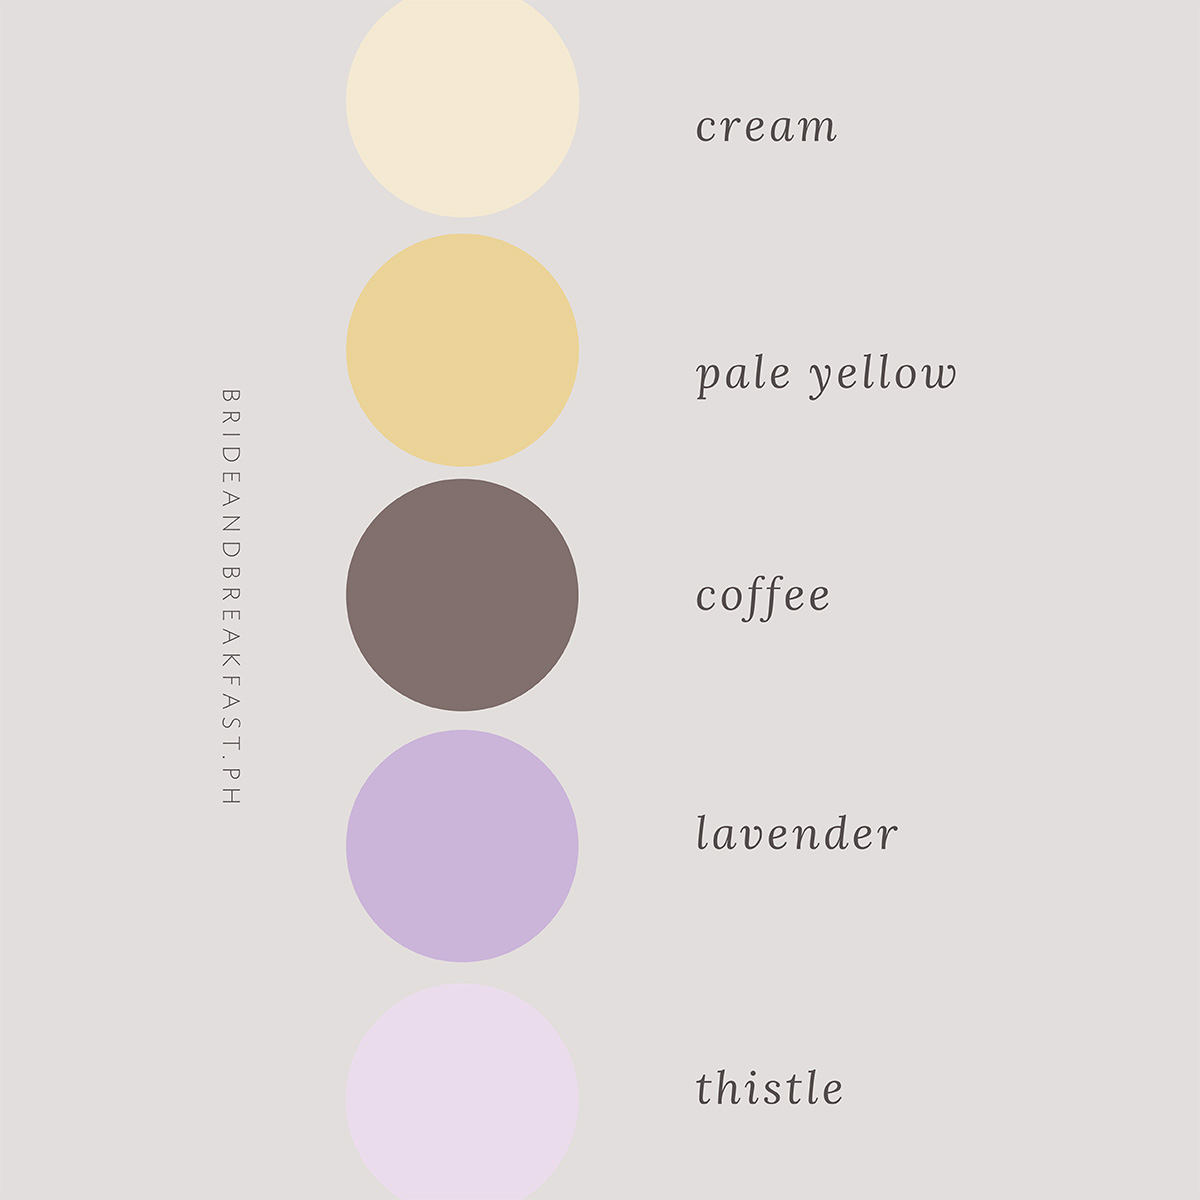 Cream, pale yellow, coffee, lavender, thistle